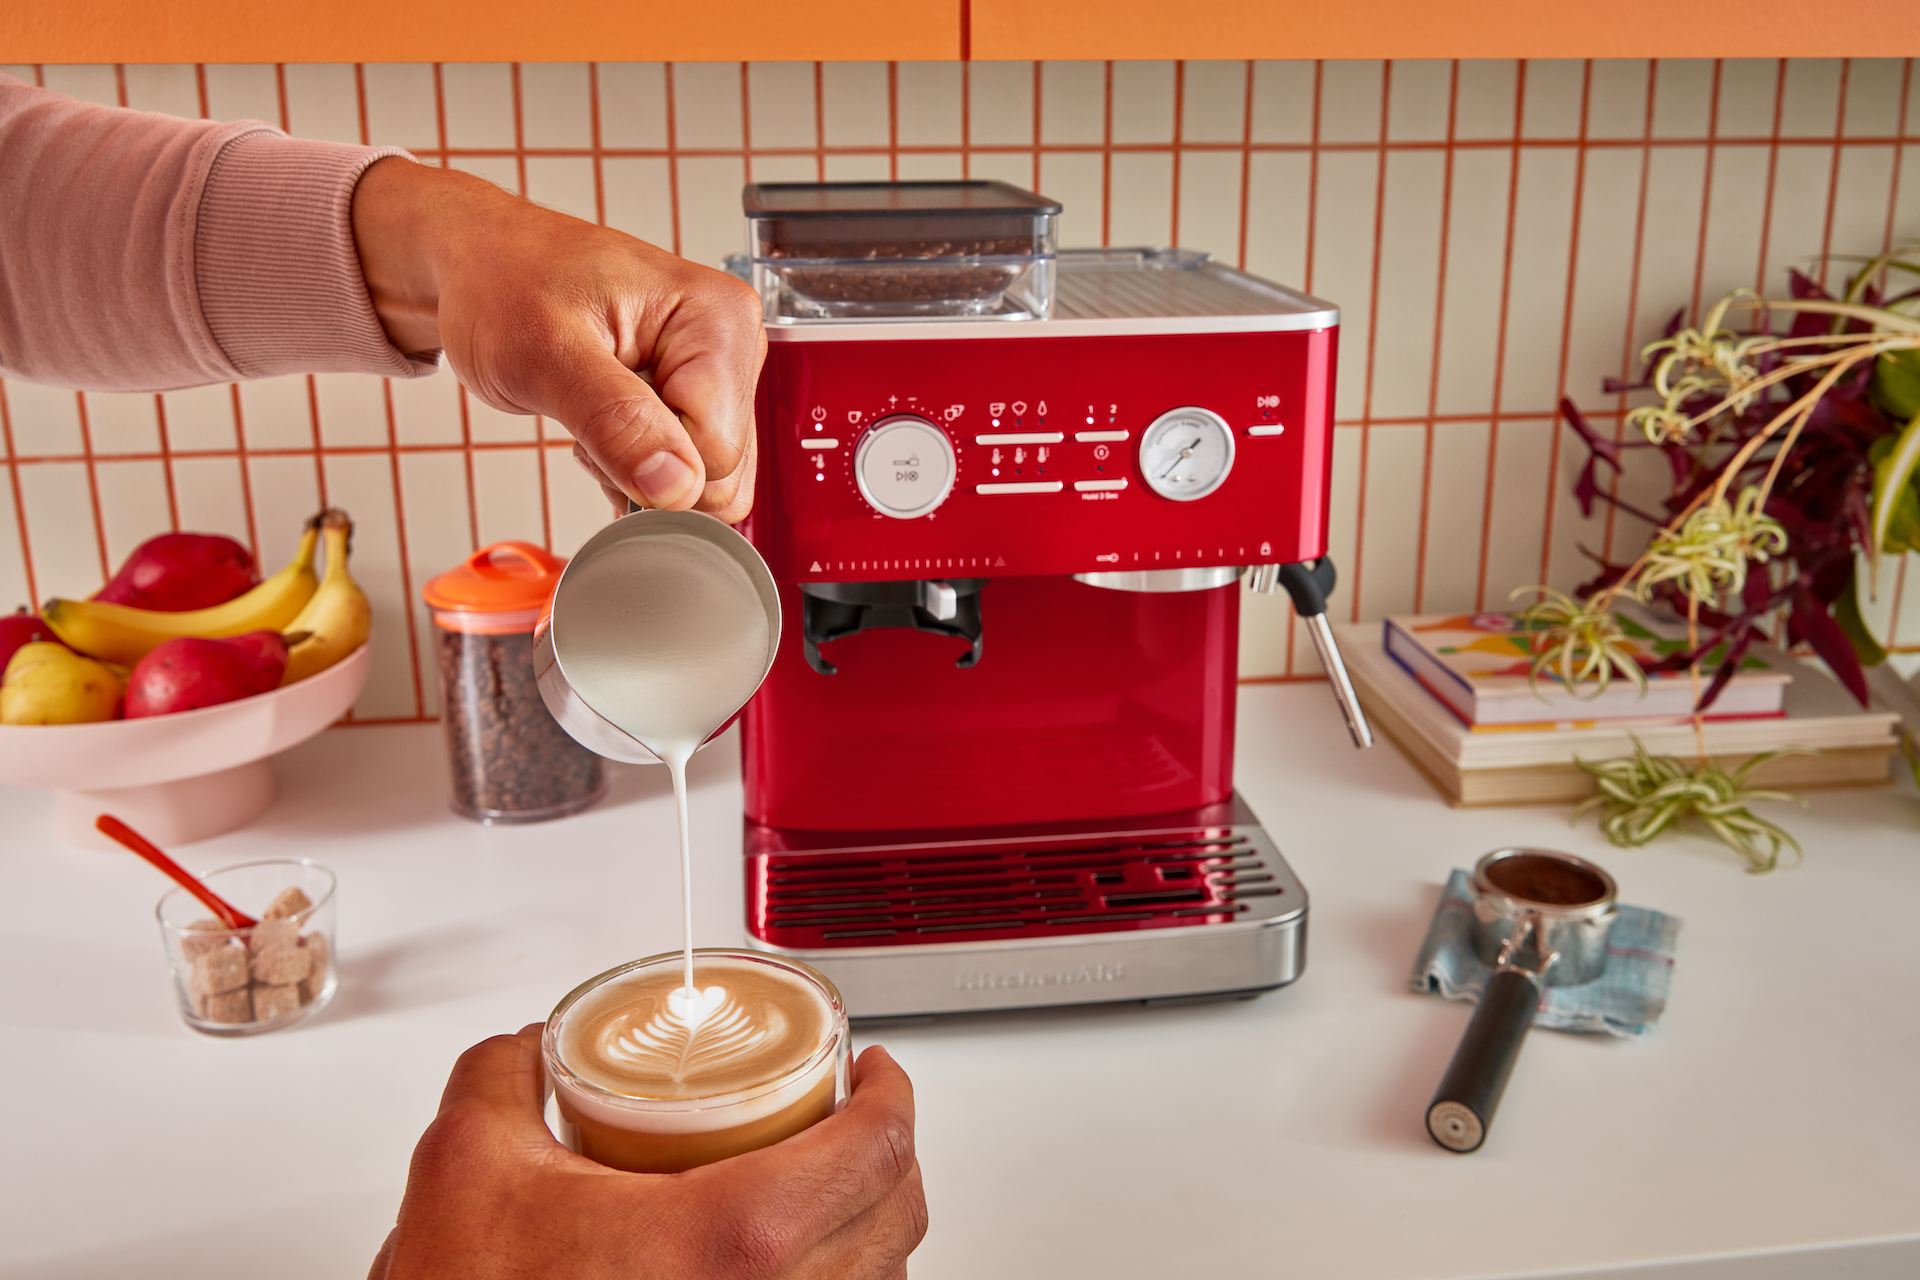 KitchenAid Espresso machine